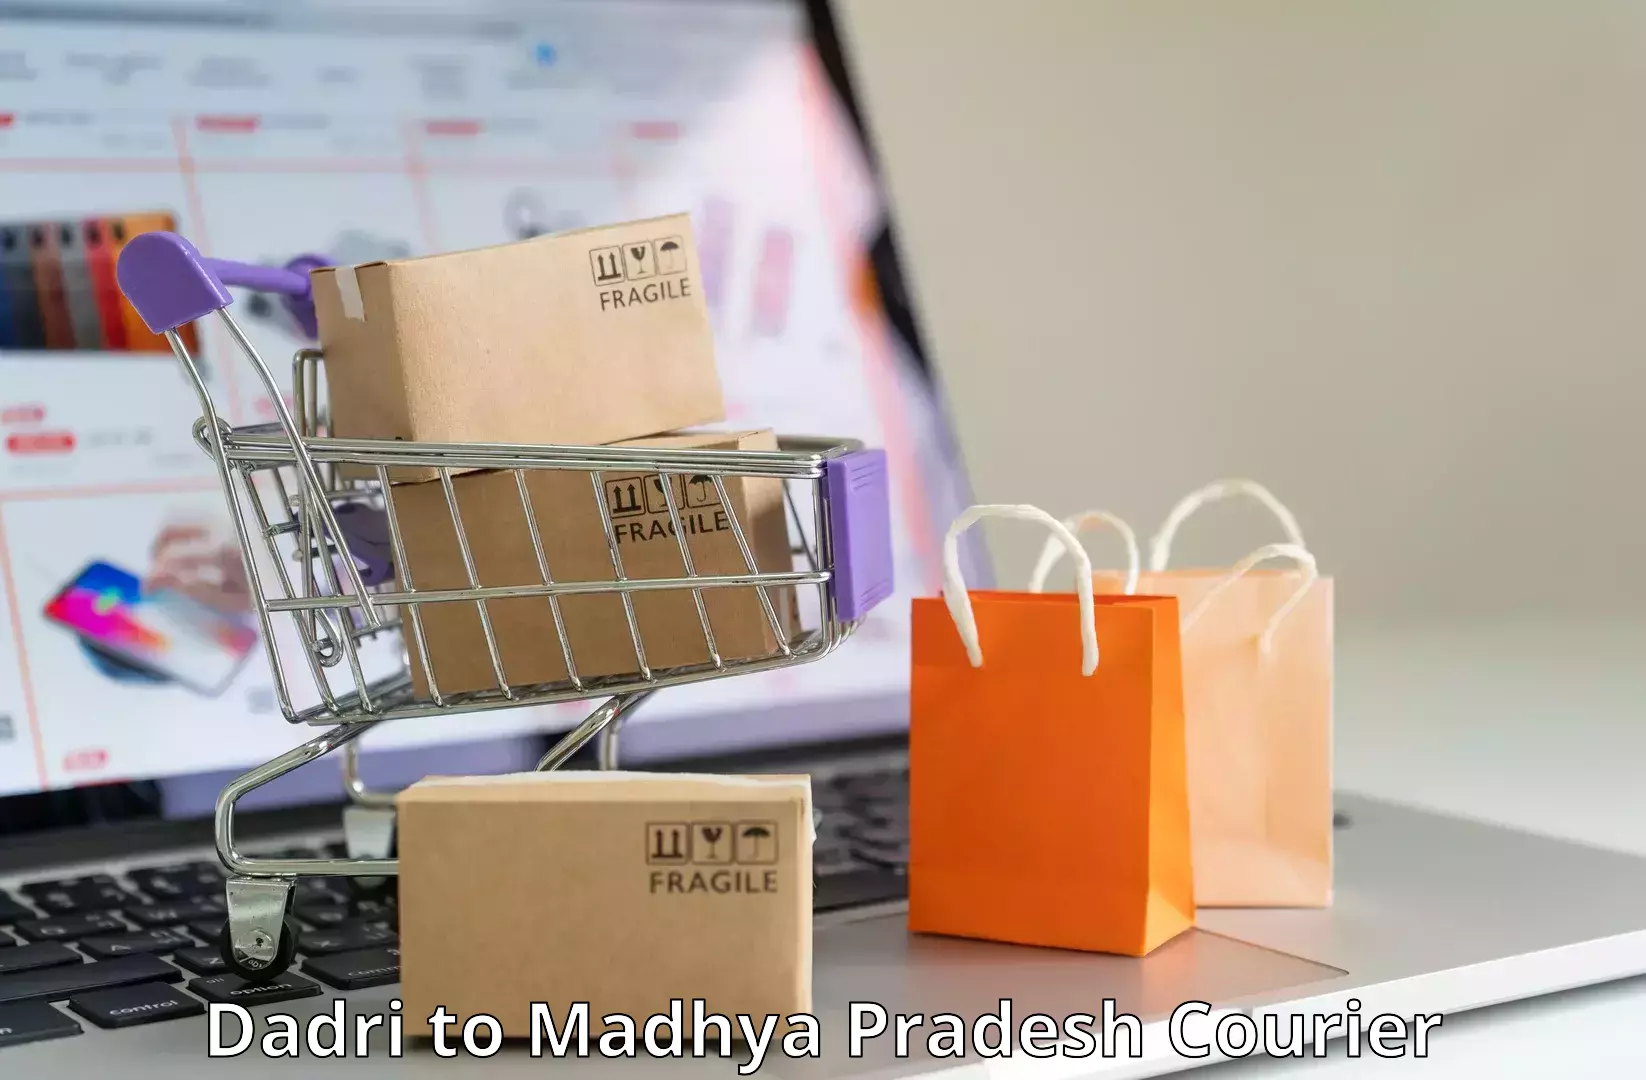 Global shipping networks Dadri to Mandideep